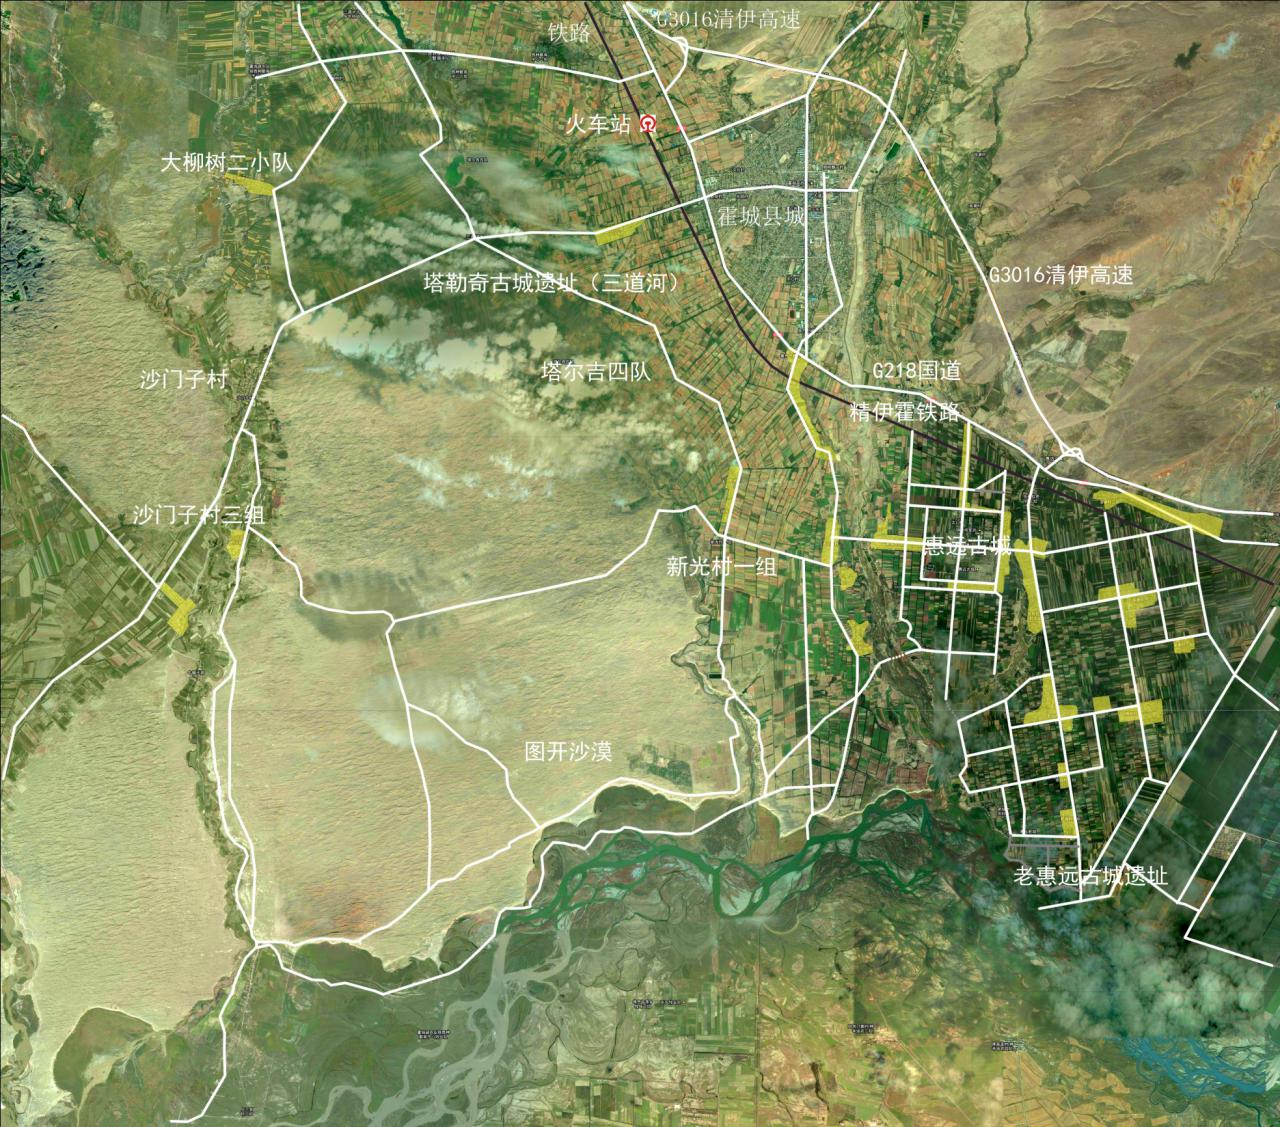 Conceptual rejuvenation planning and design of Huiyuan ancient city in Yili Xinjiang(图2)